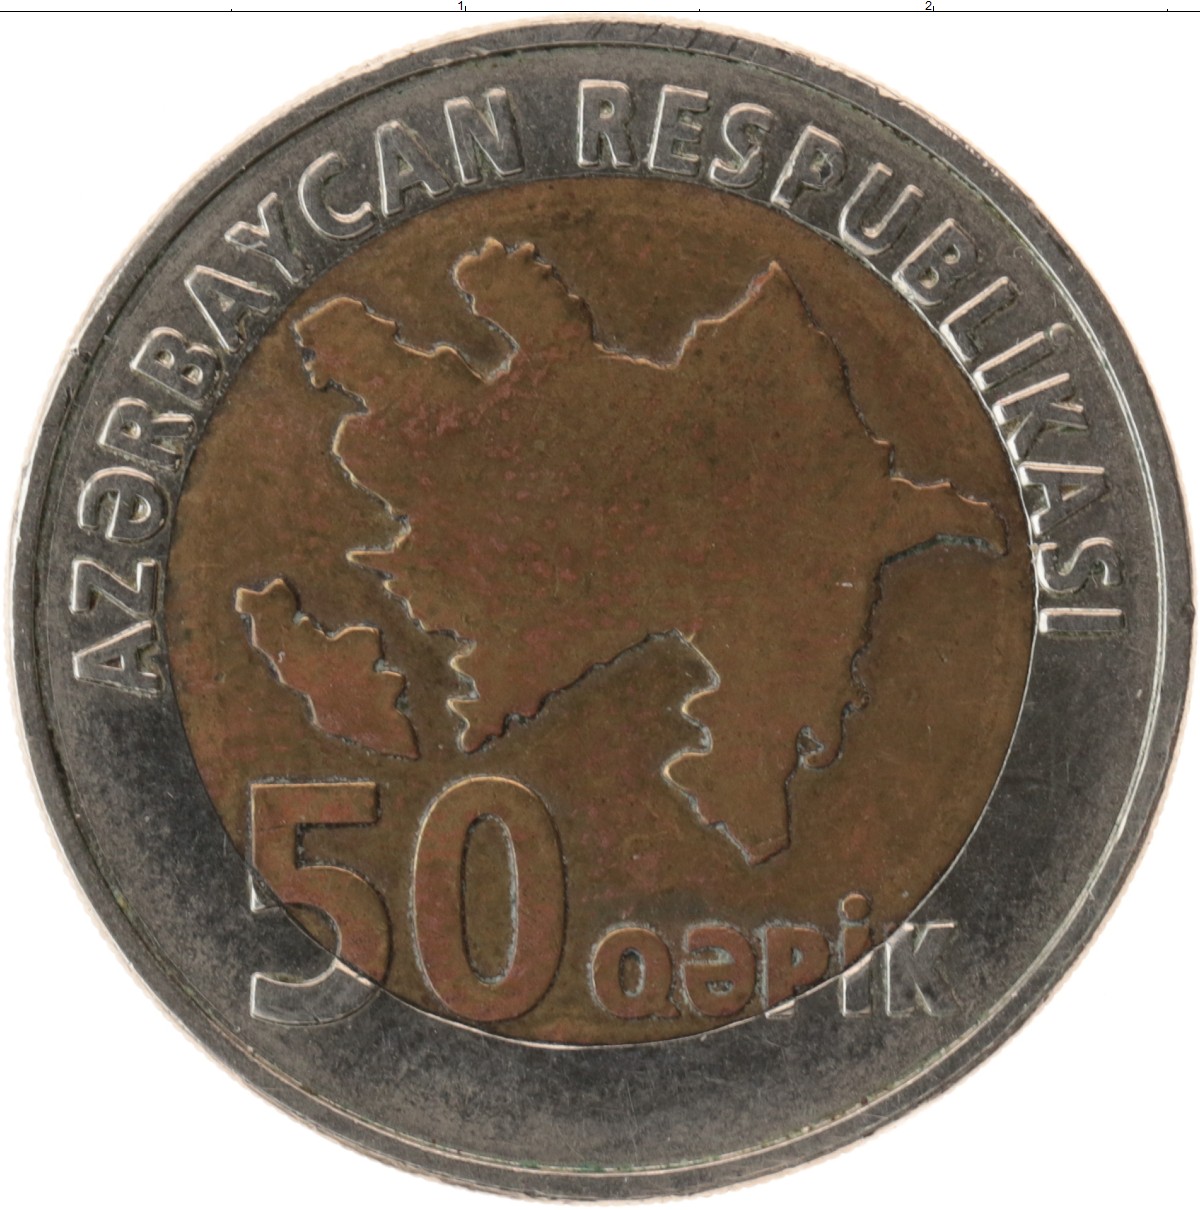 Азербайджанские монеты. Азербайджан 50 гяпик 2006. Азербайджанские монеты 50 Qepik. Монета Азербайджана 50 гяпиков 2006 года. Азербайджан 50 гяпиков.